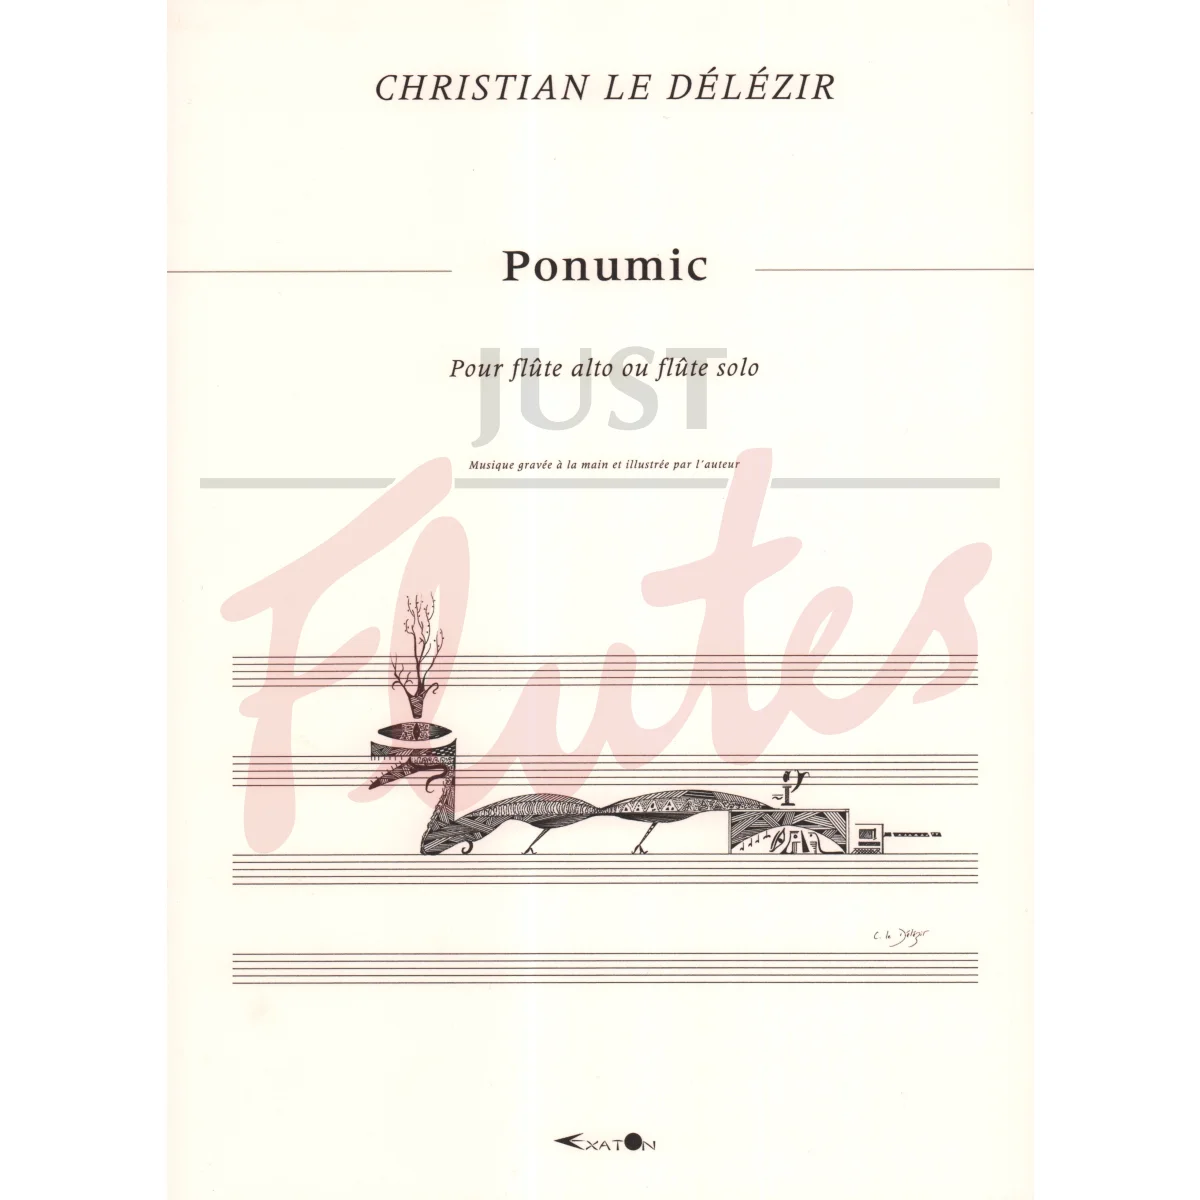 Ponumic for Alto Flute (or Flute) Solo - Art Edition